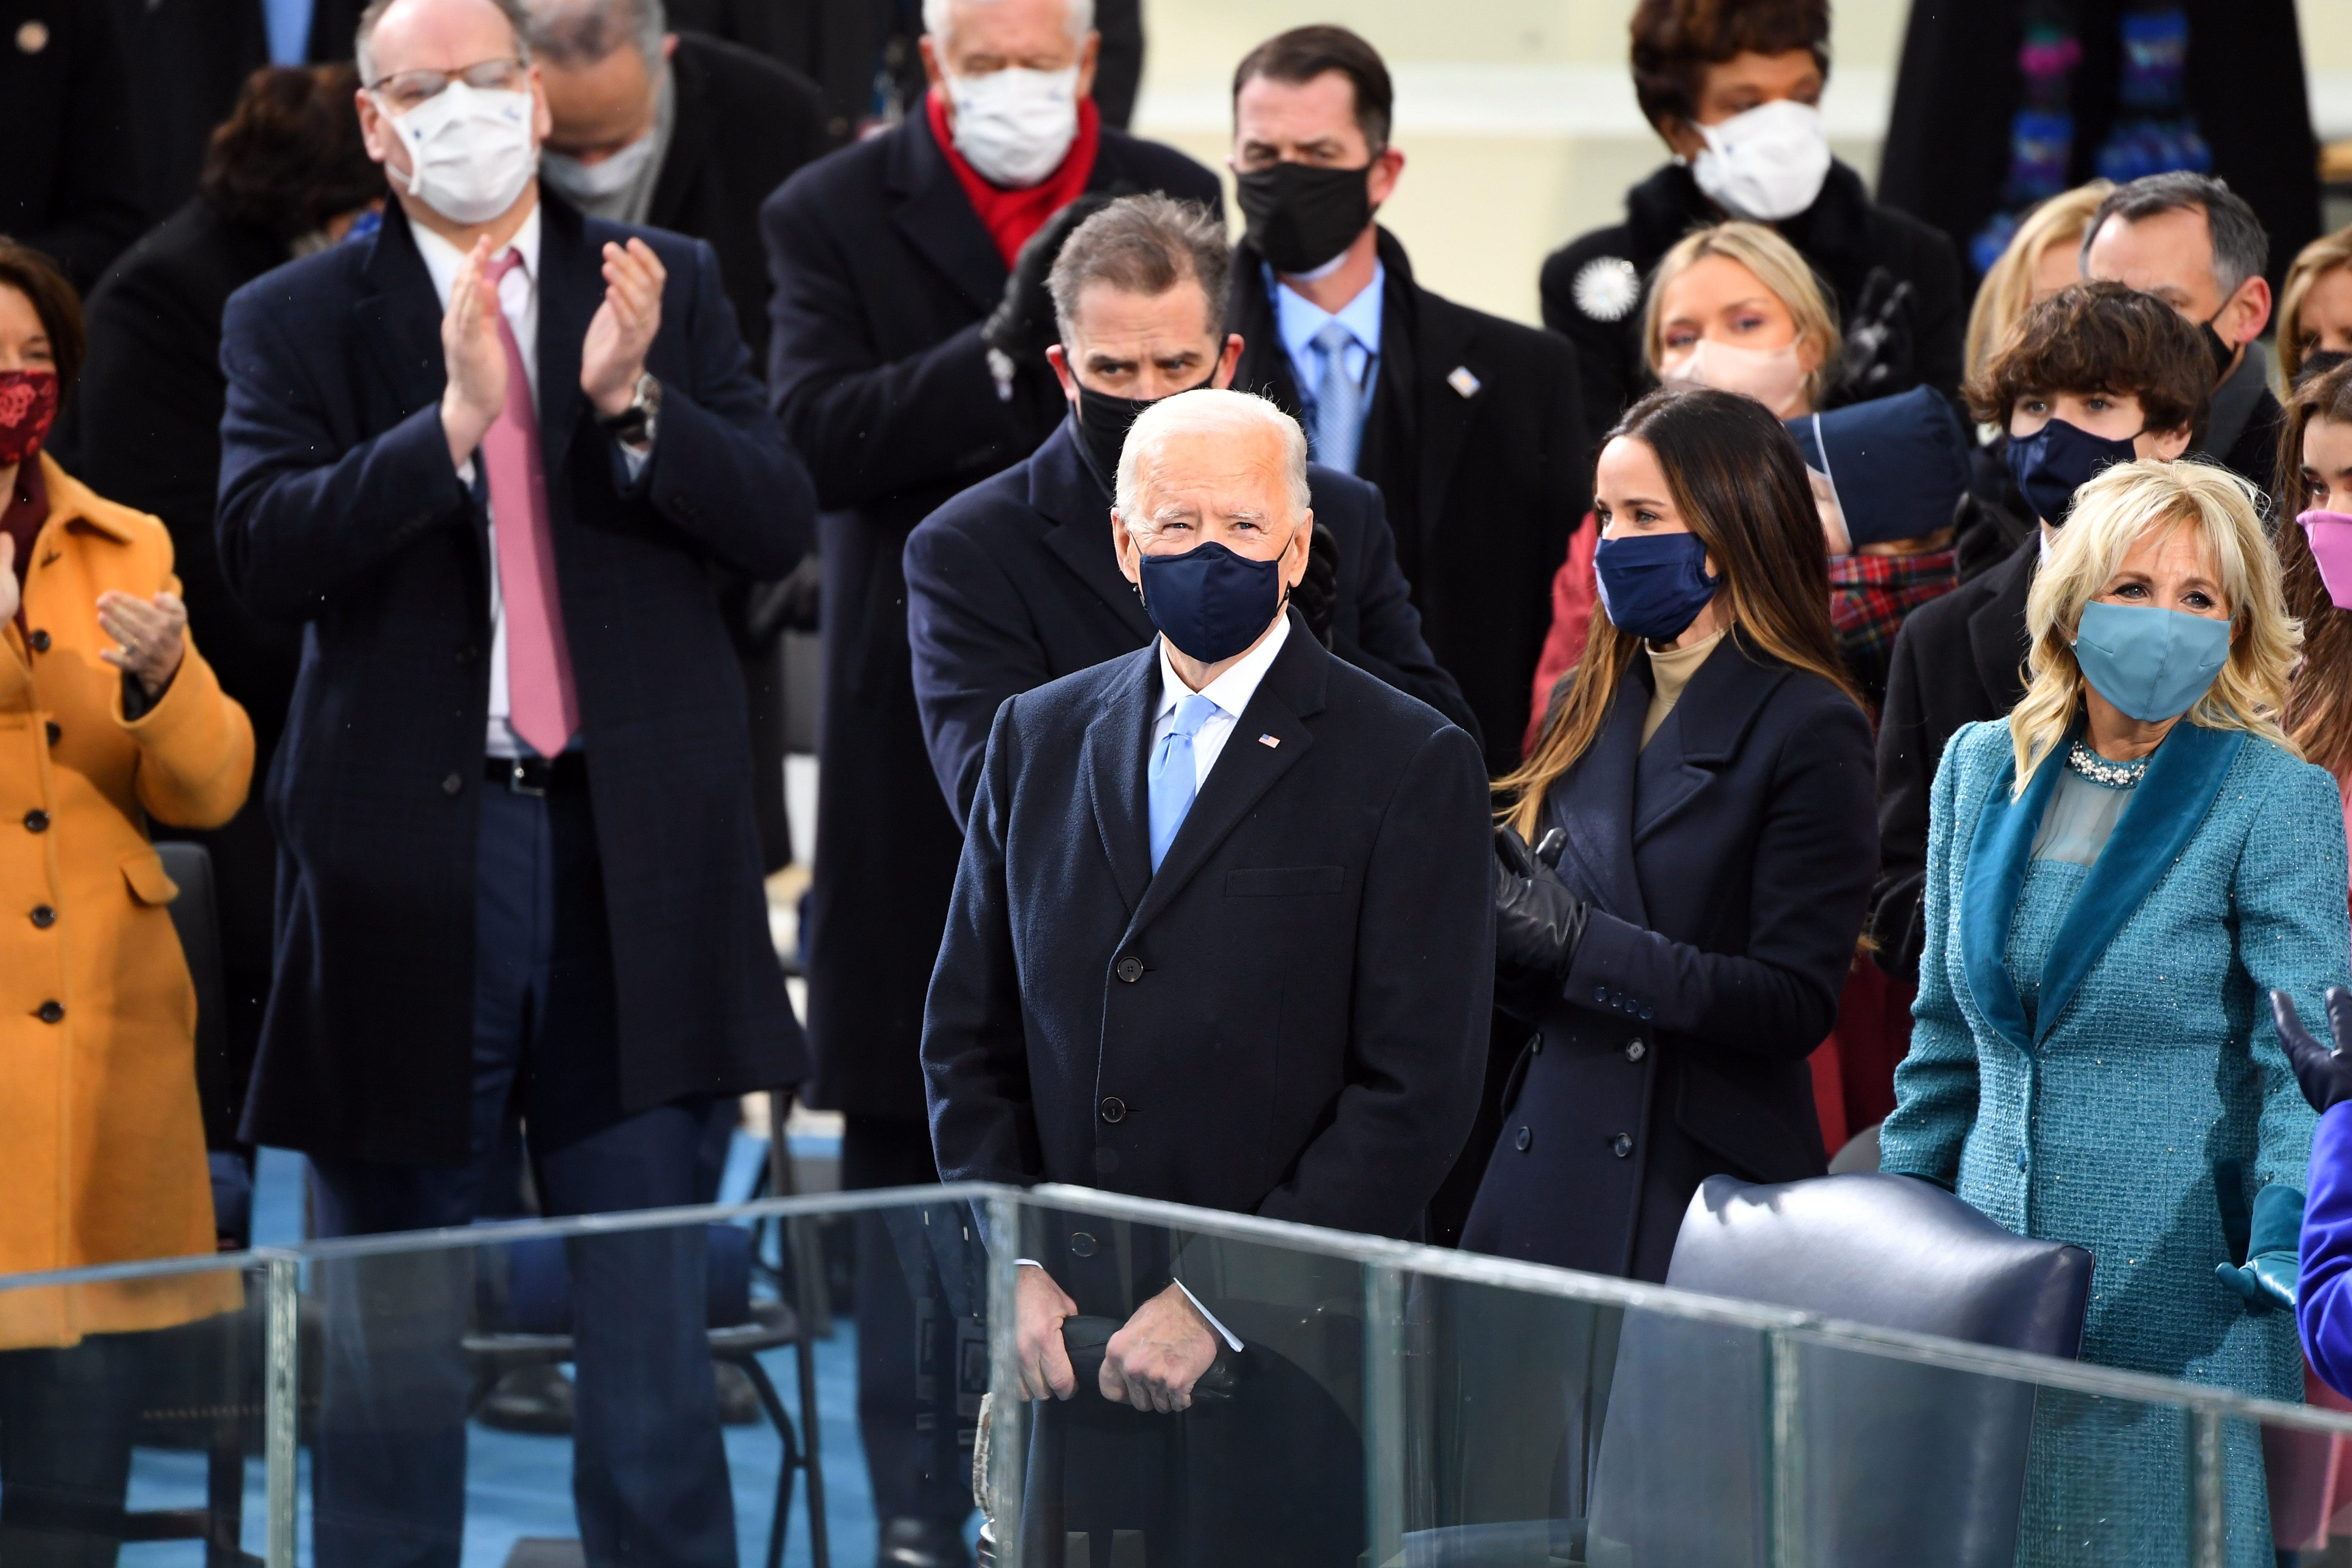 TV marked Joe Biden's inauguration with familiar, comforting image